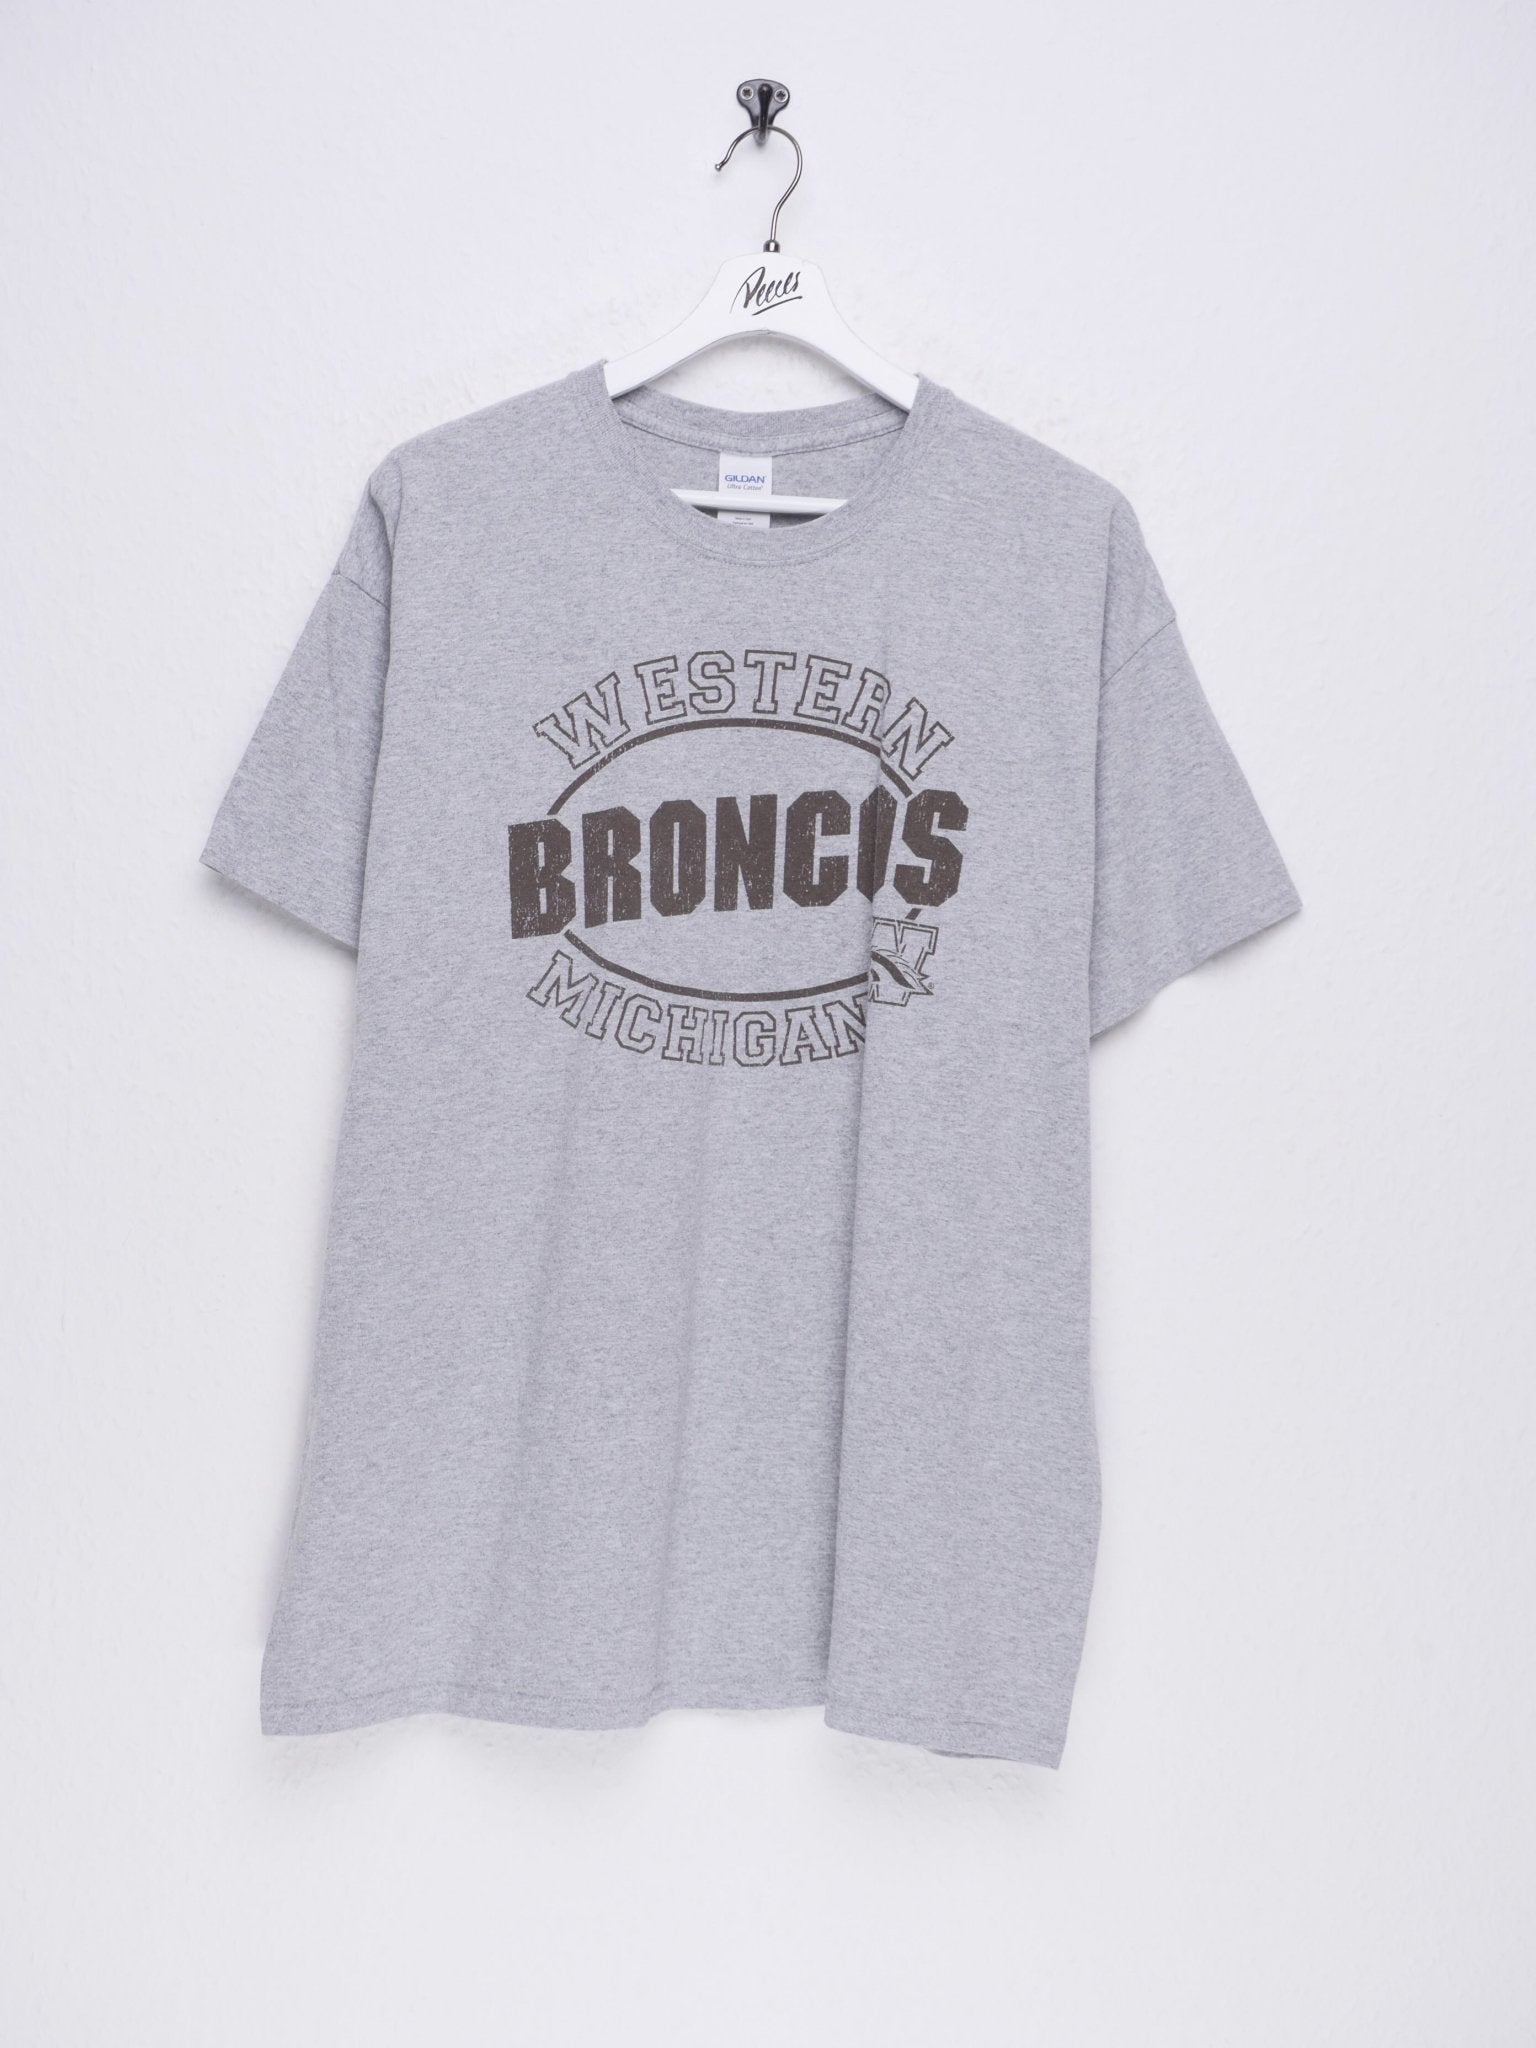 Western Broncos printed Graphic Vintage Shirt - Peeces